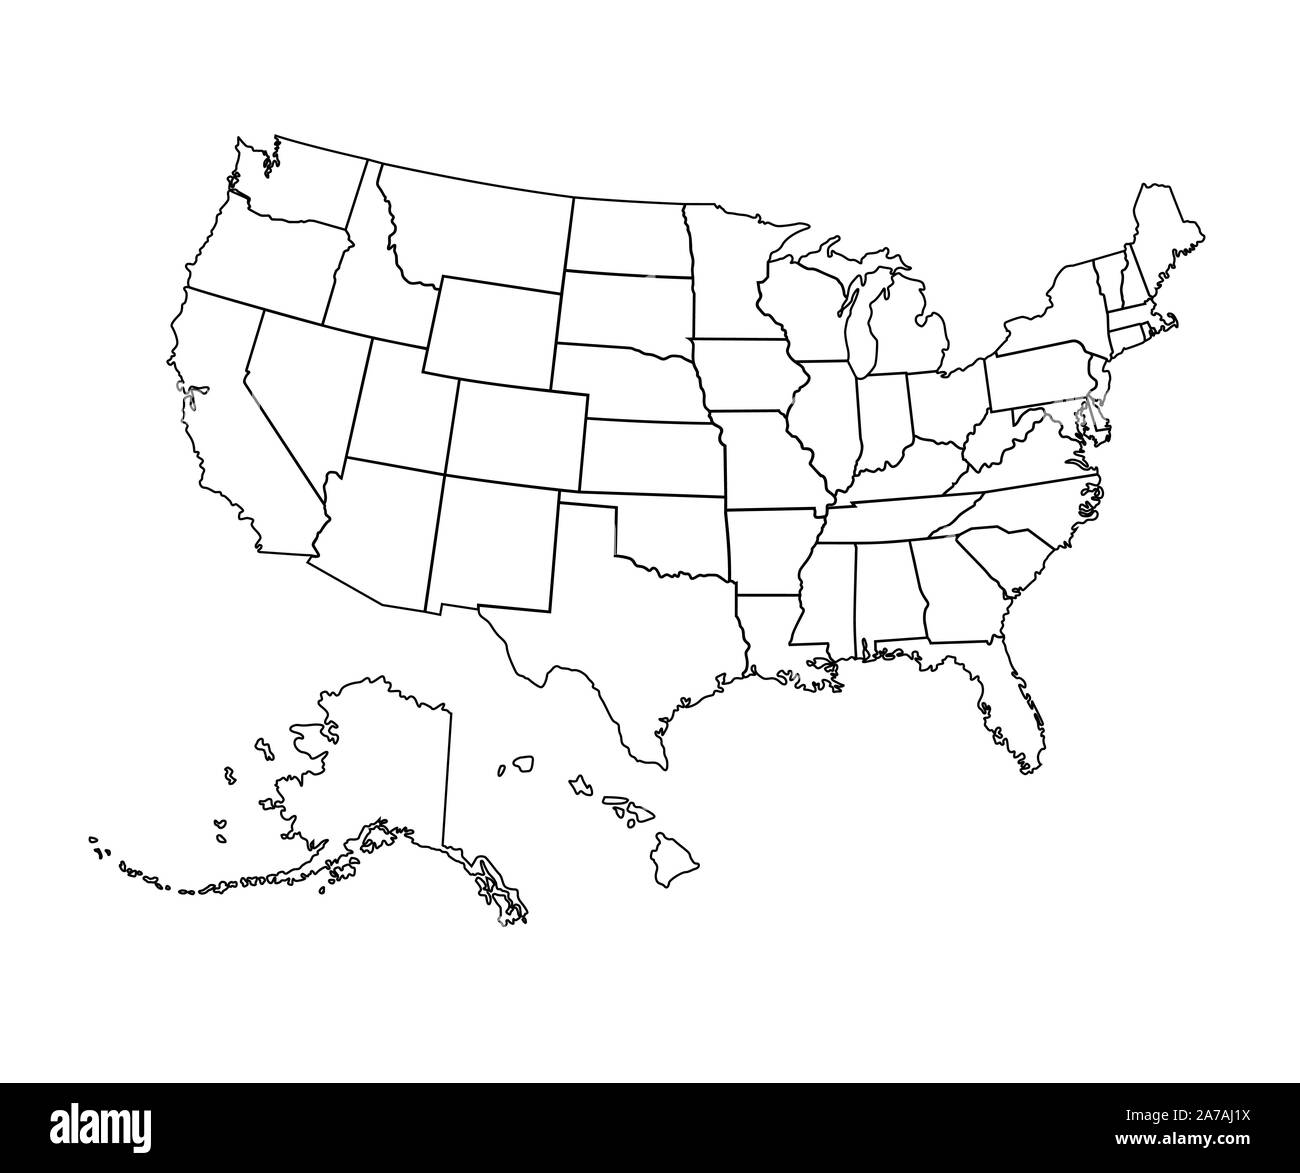 Black USA map - vector illustration. Black contour of United States, Alaska and hawaii. Stock Vector